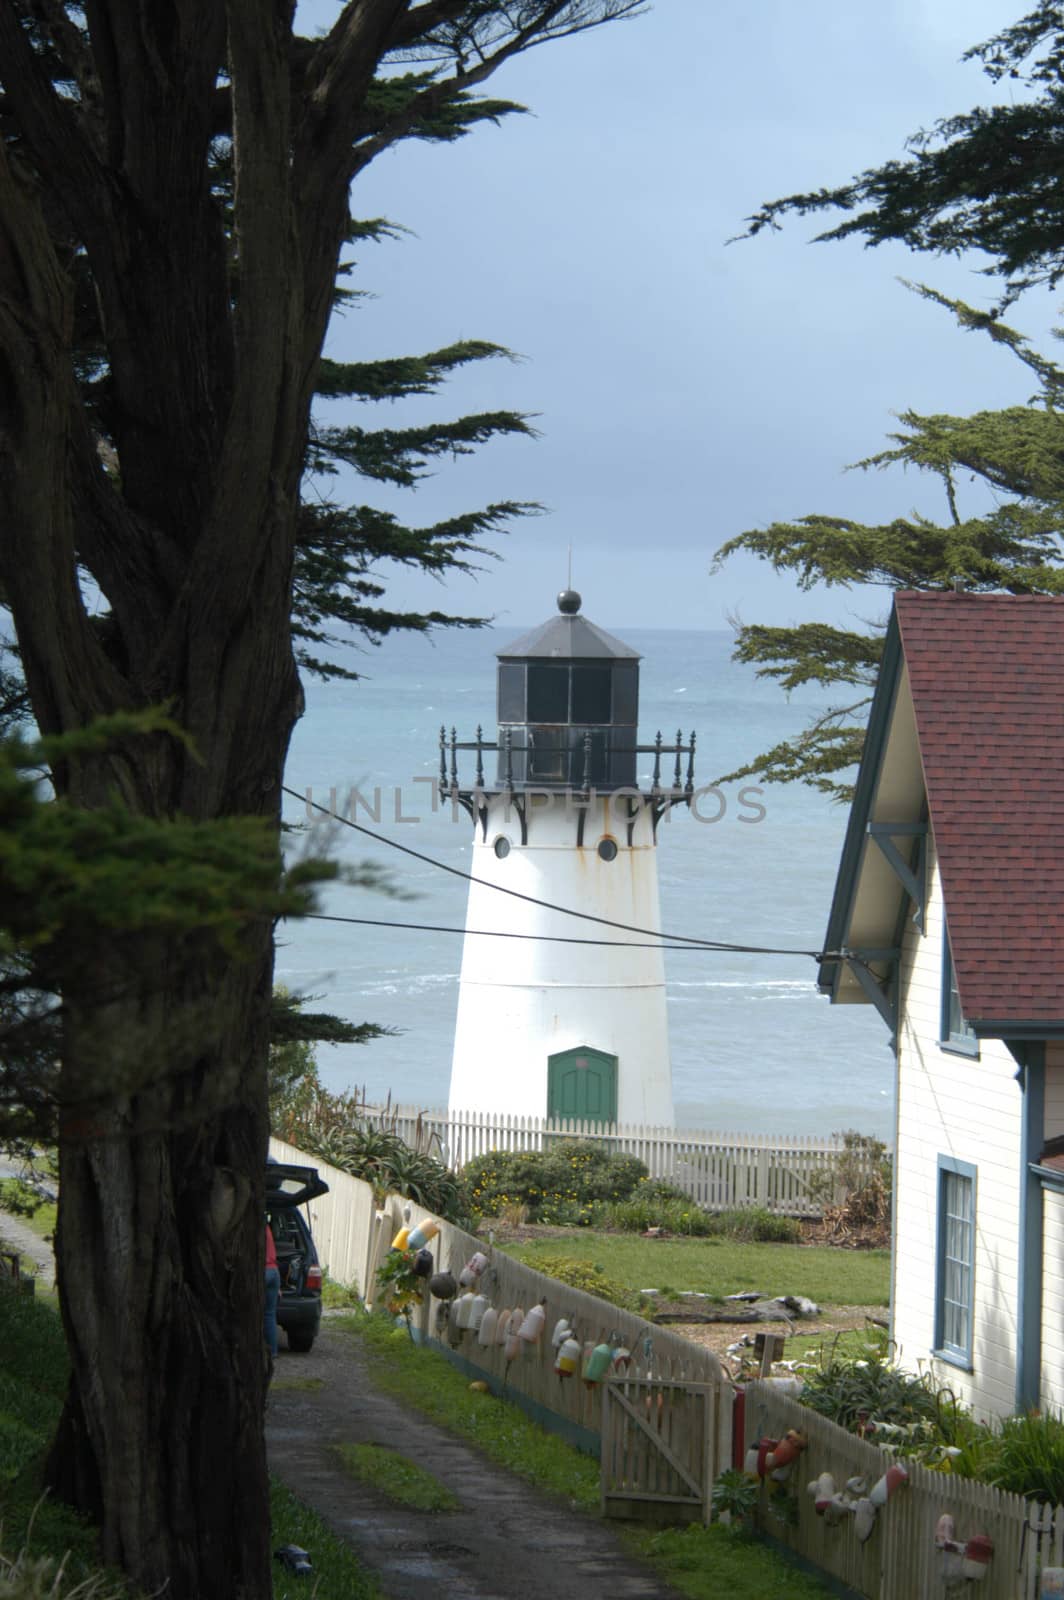 Pt Montara Lighthouse Hostel, Northern California Coast